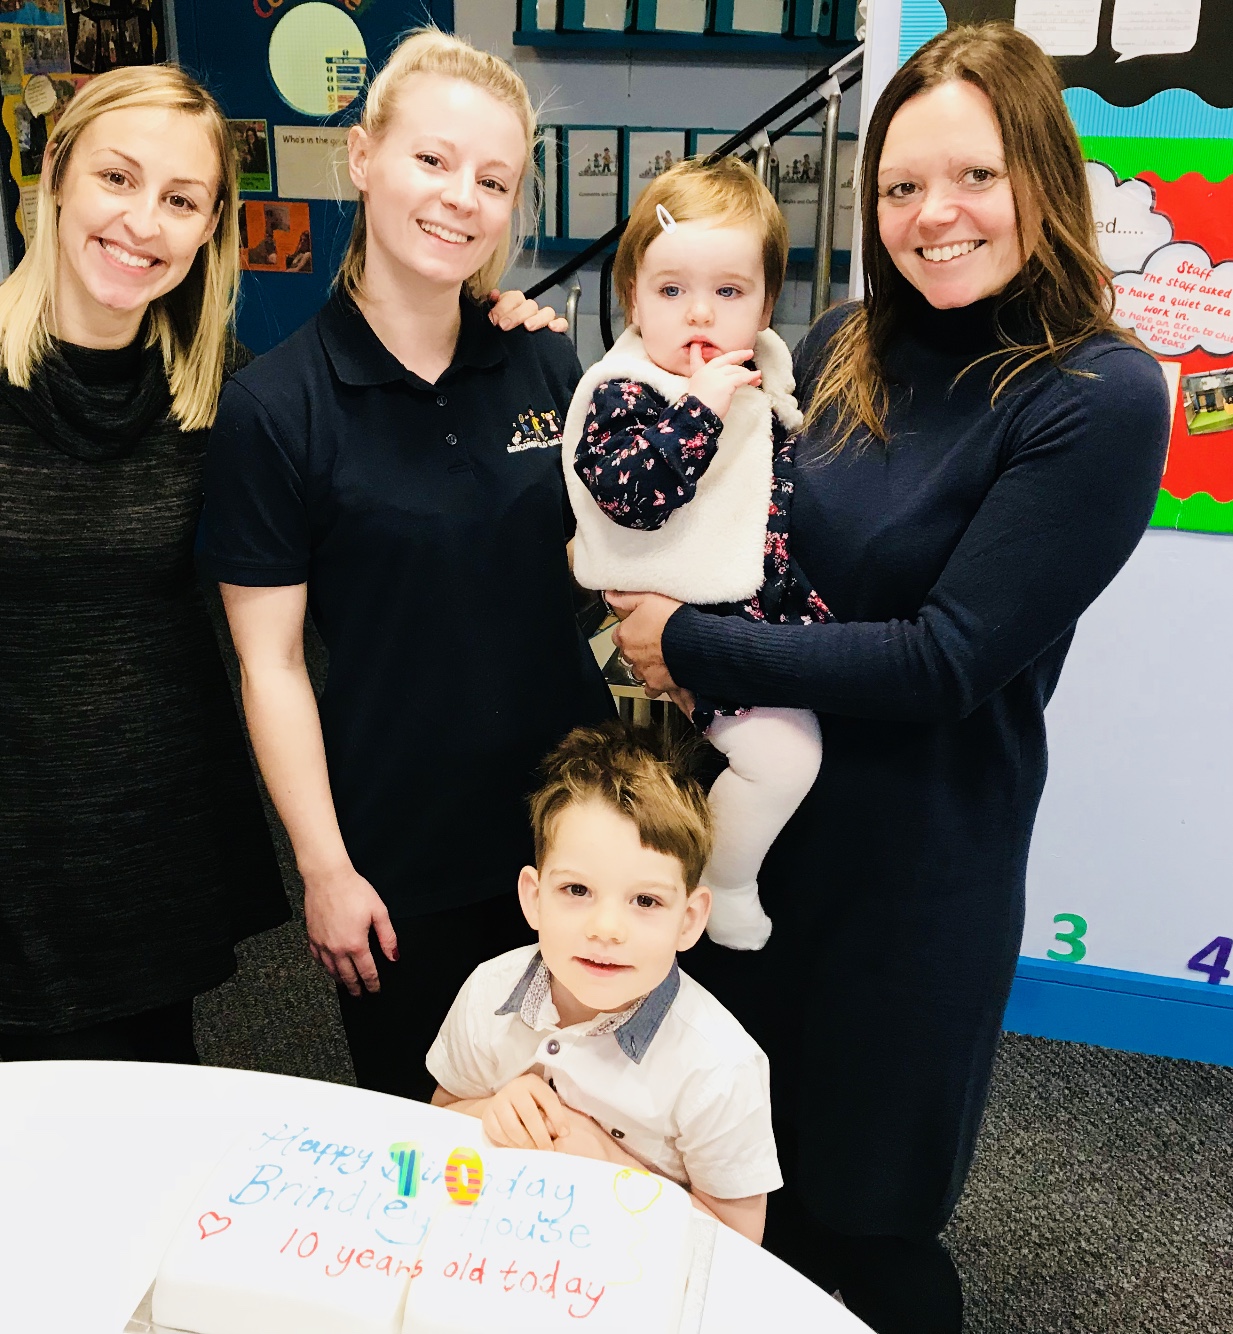 Brindley House Nursery Celebrates its 10th Birthday